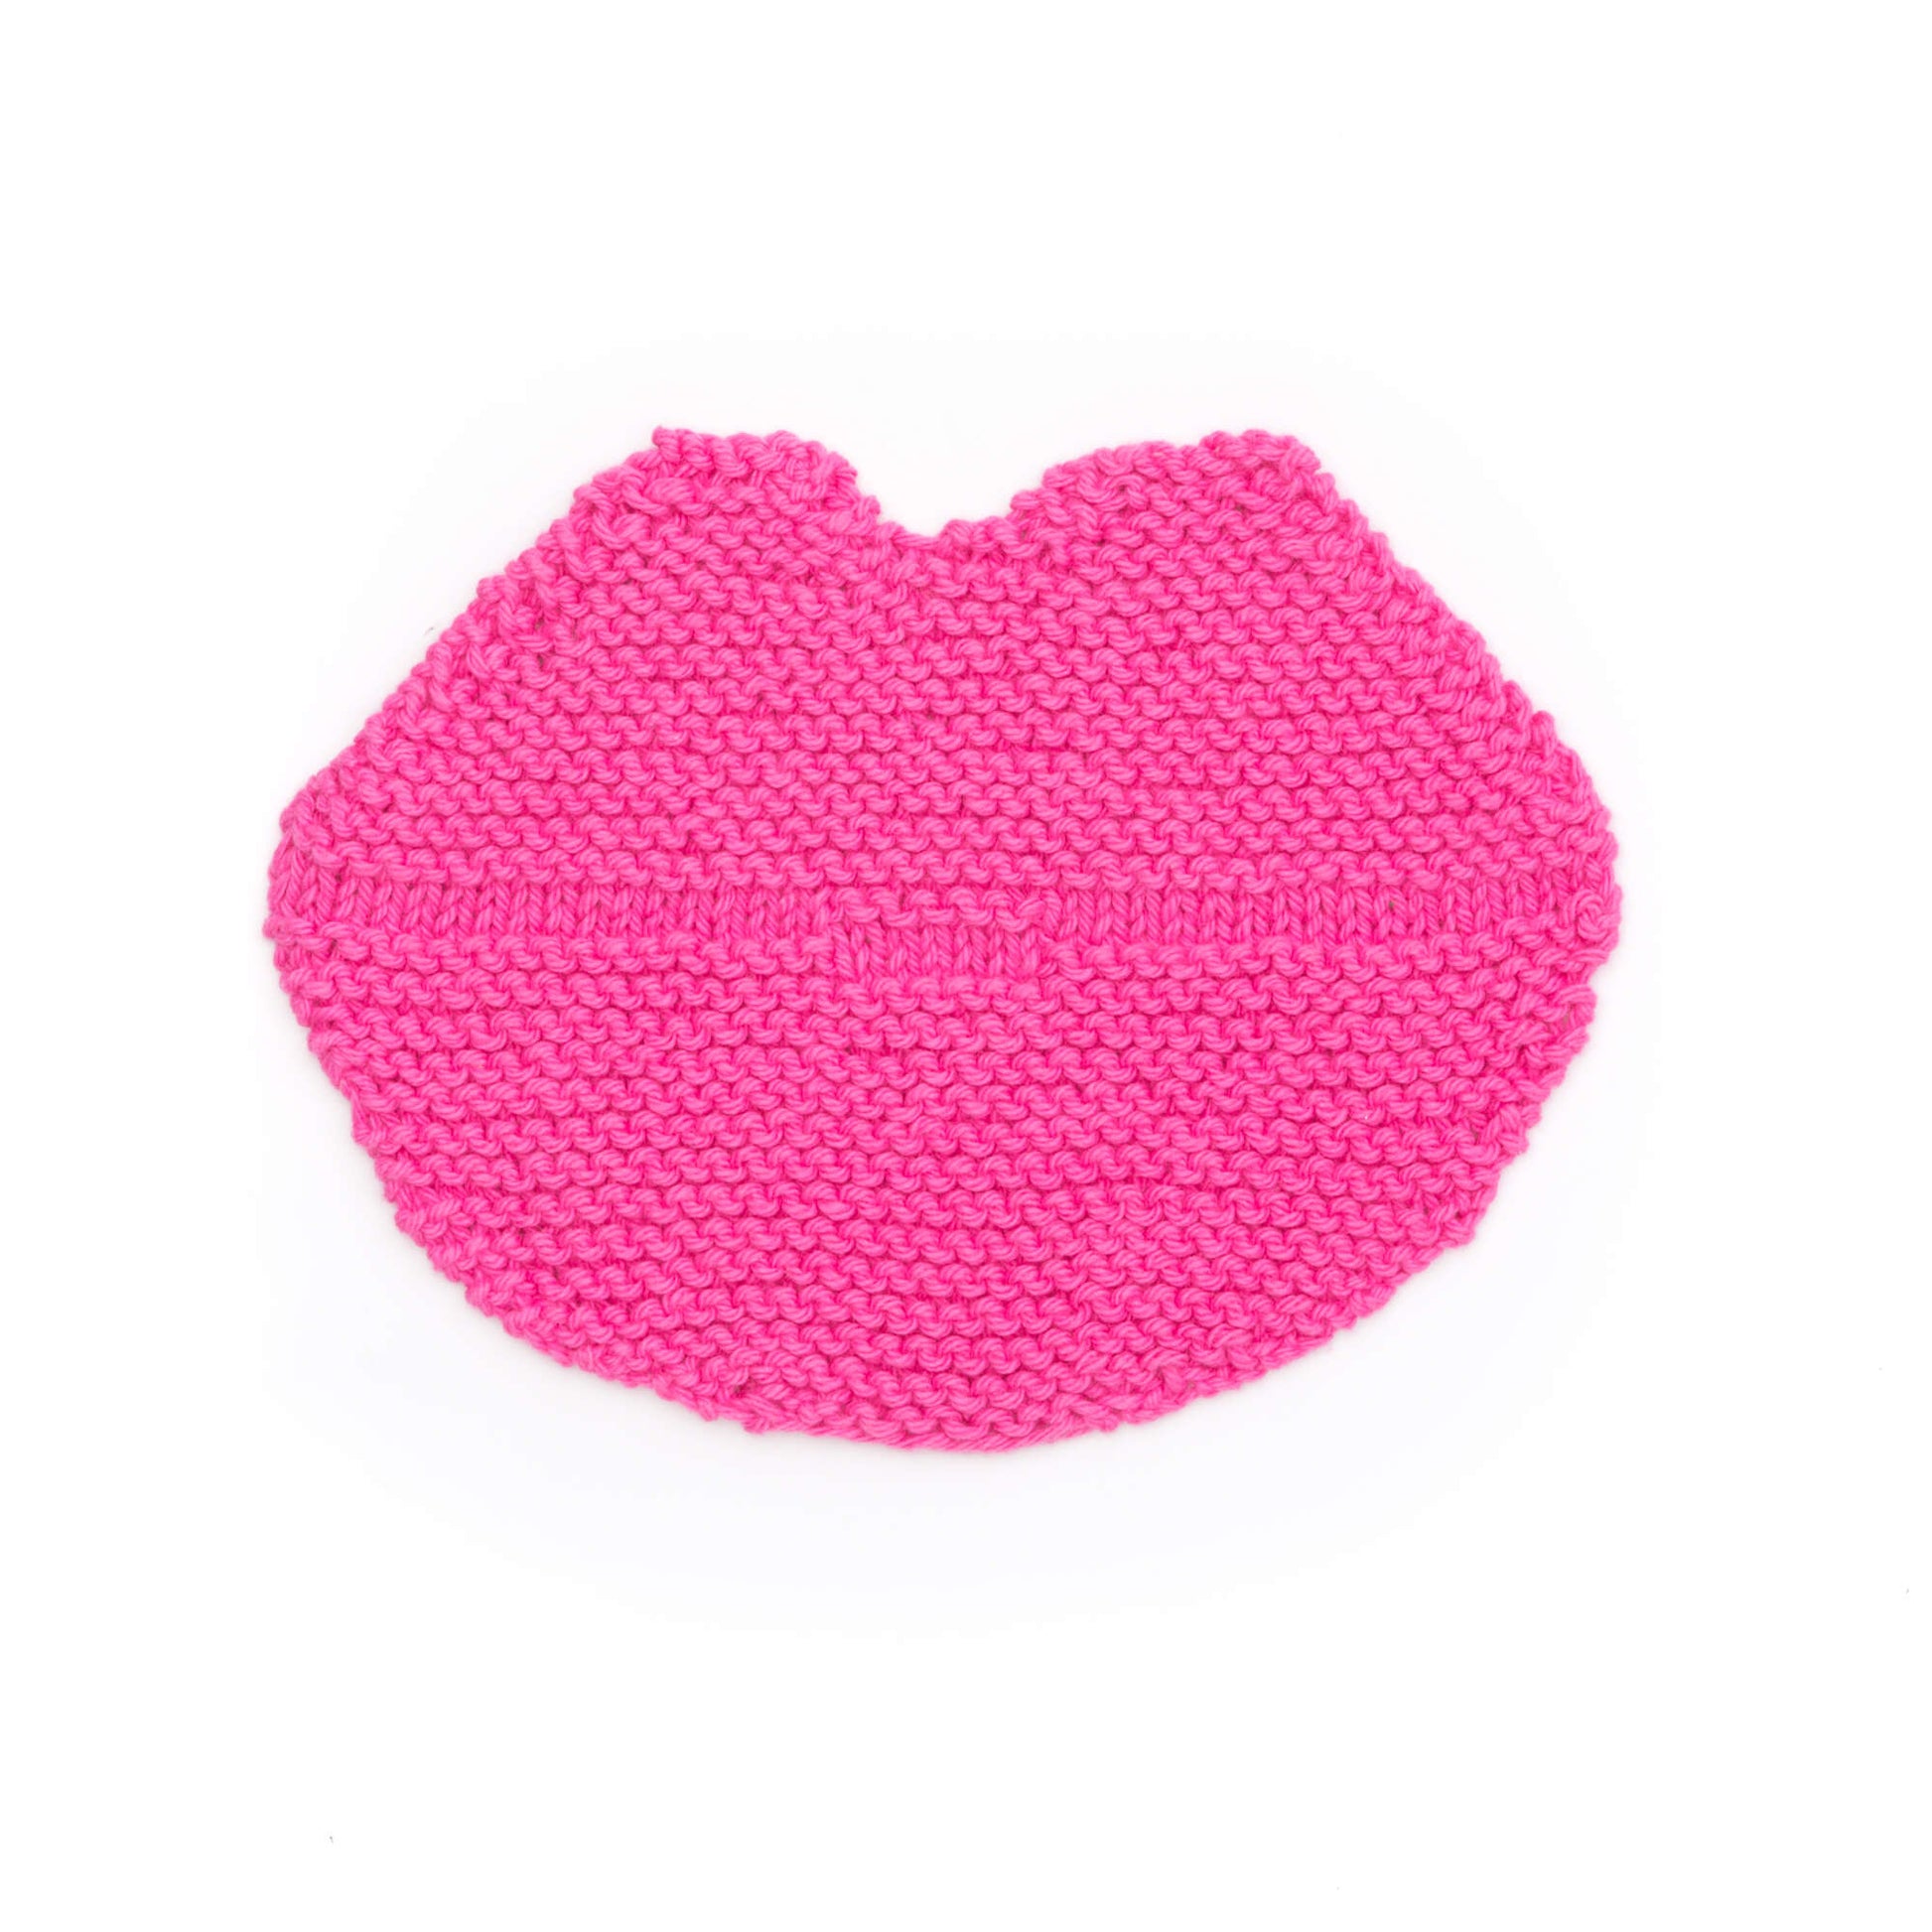 Free Lily Sugar'n Cream Big Kiss Dishcloth Knit Pattern